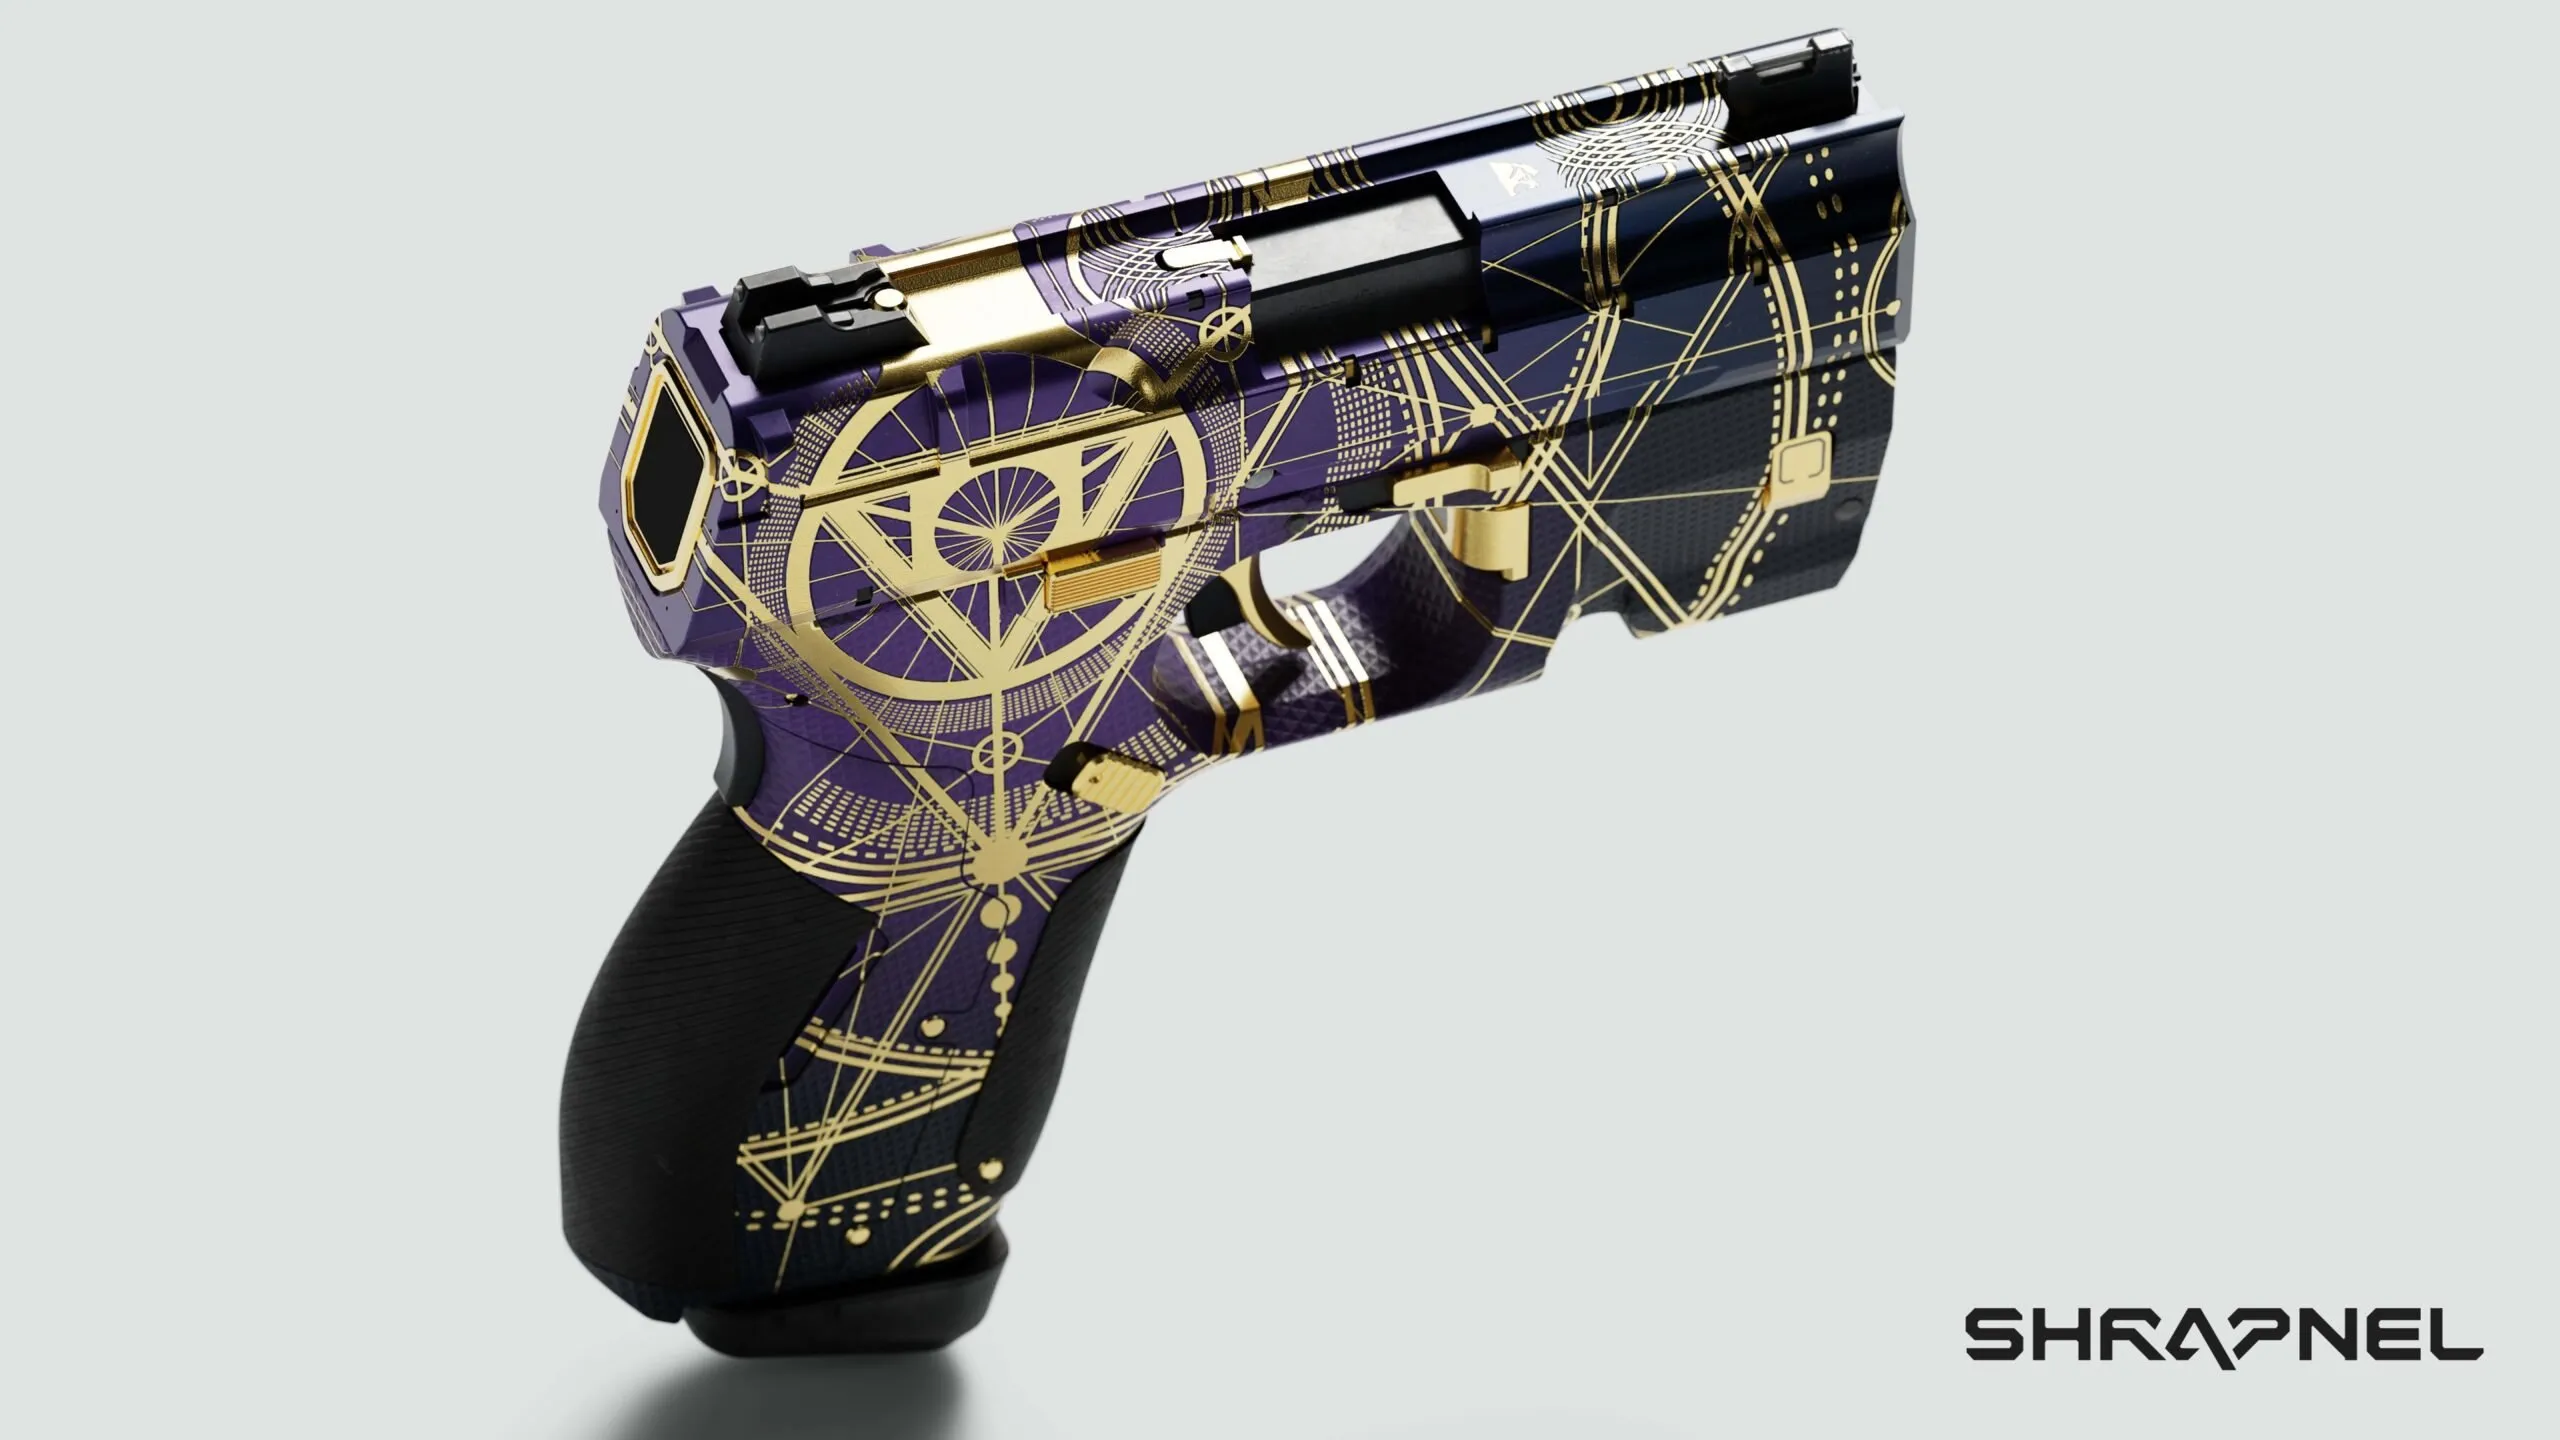 The "Cosmic War" pistol skin